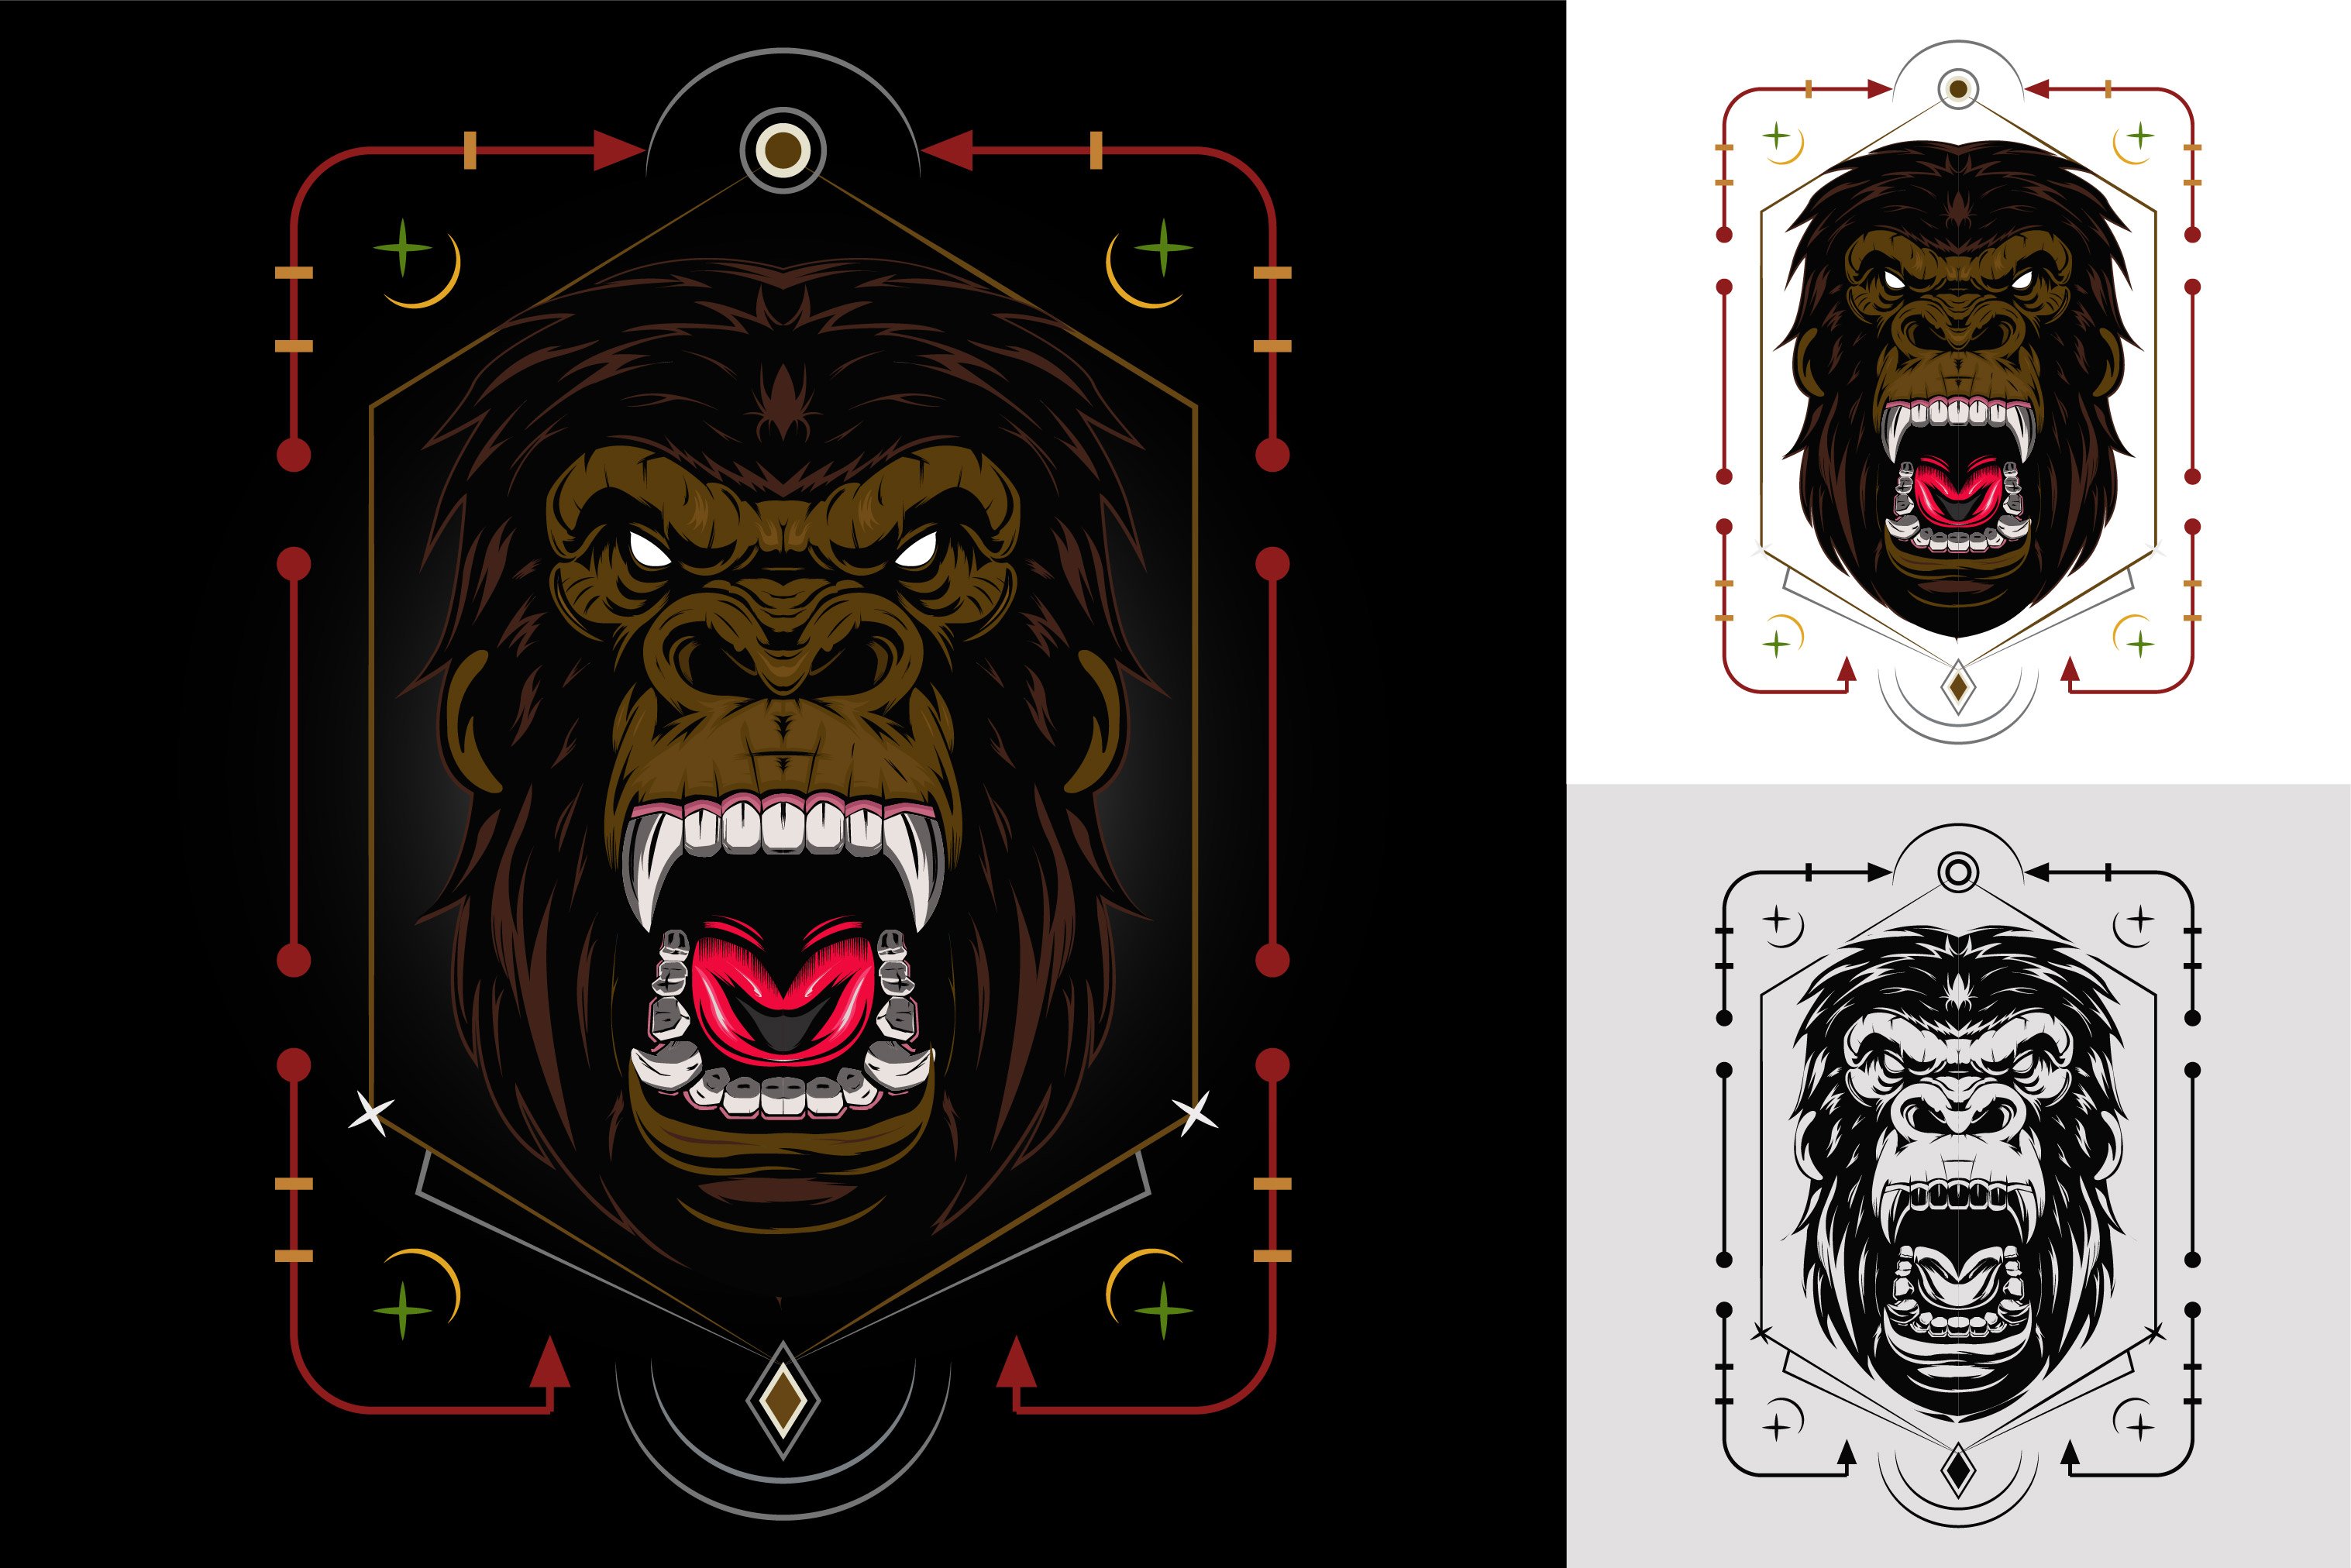 Illustration ferocious the gorilla cover image.